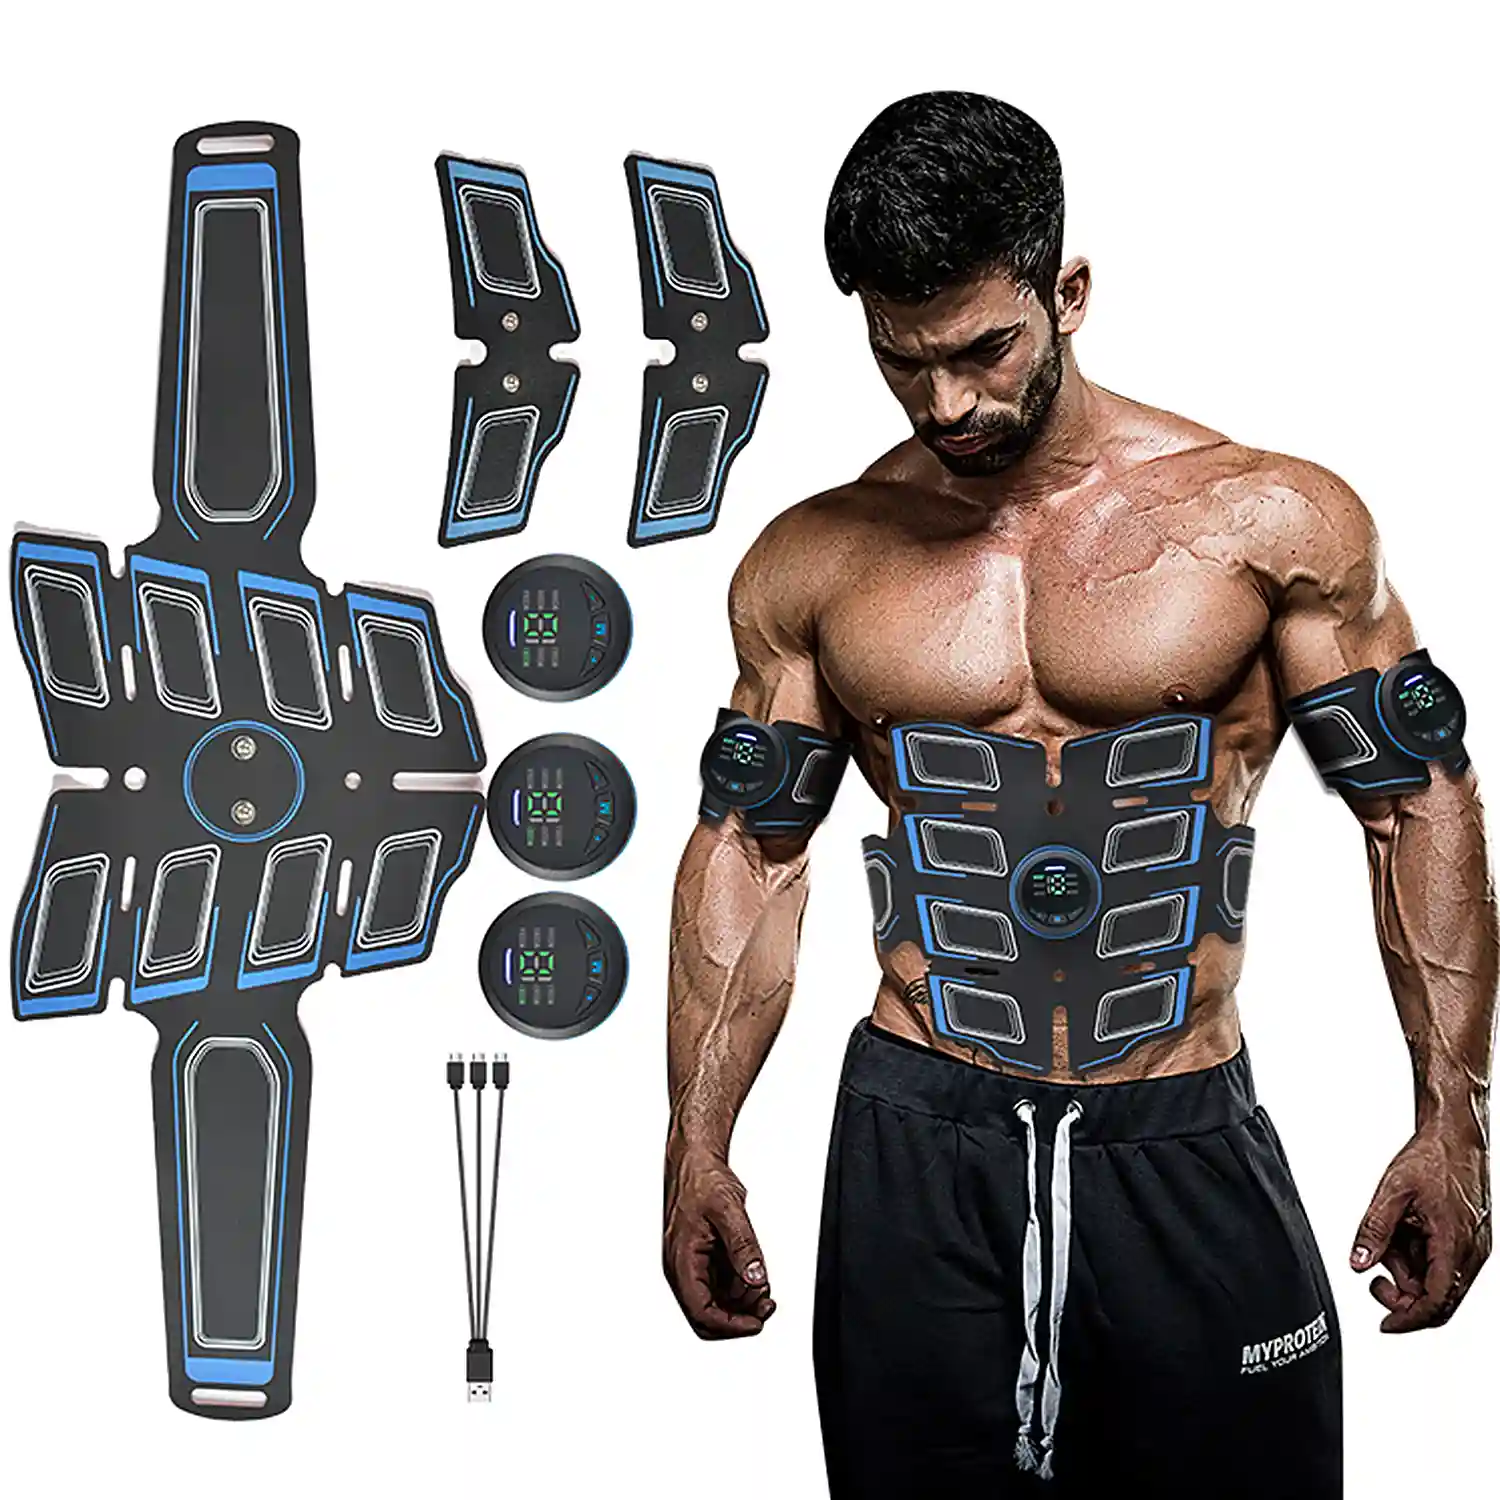 Electroestimulador Muscular, Dispositivo de Electroestimulación Muscular  Estimulador EMS de Electroestimulación de Cinturón Abdominal. ACTIVE  Biensenido a ACTIVE